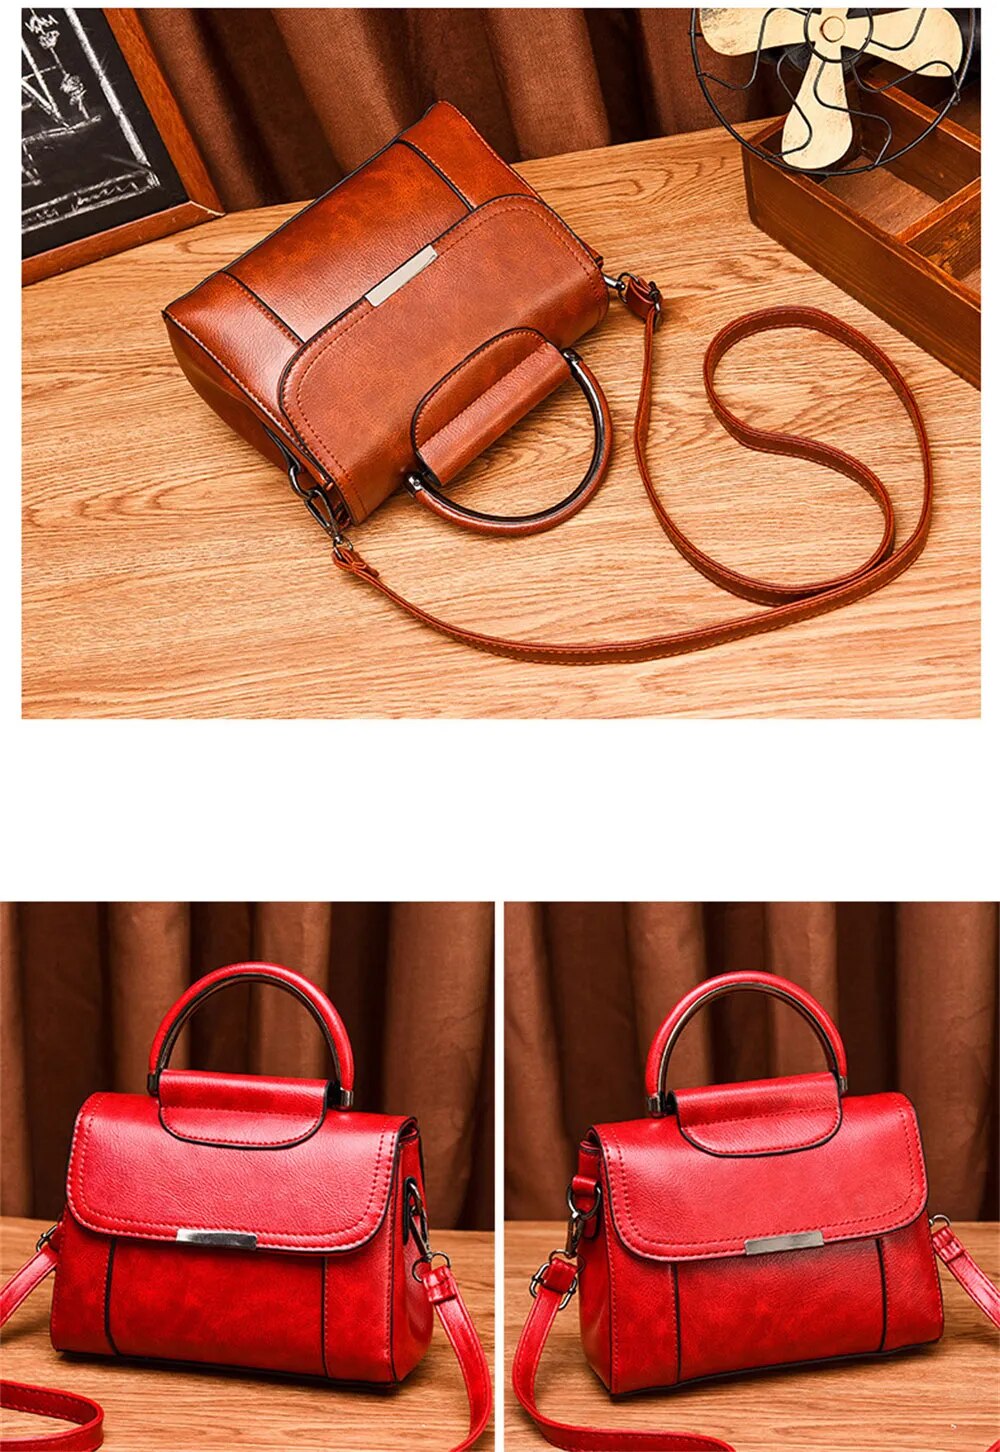 Clemse N: 00001 Bag Women Messenger Shoulder Bag Literary Bag Leather Women's Bag Designer Women Luxury Handbags